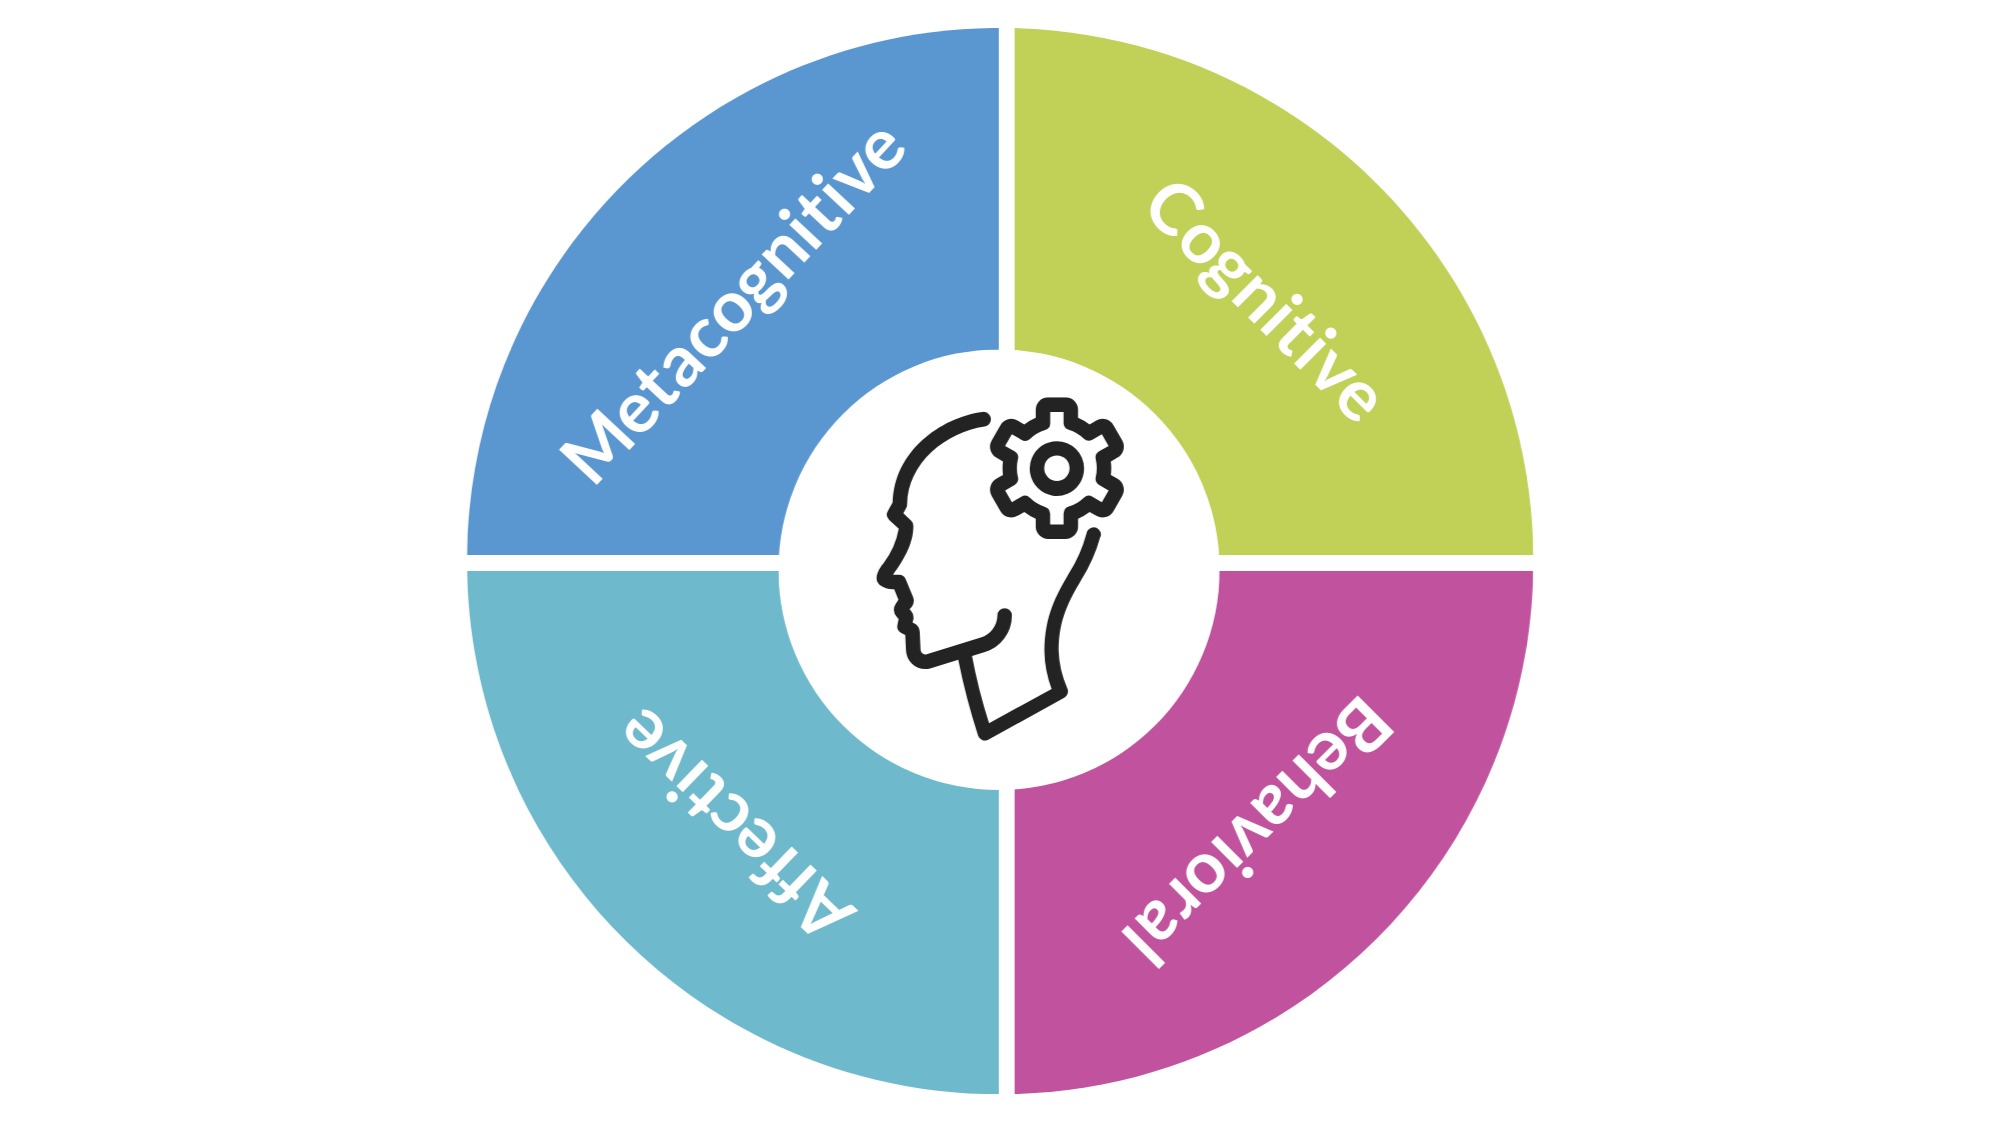 circle divided into four quadrants: metacognitive, cognitive, affective, and behavioral